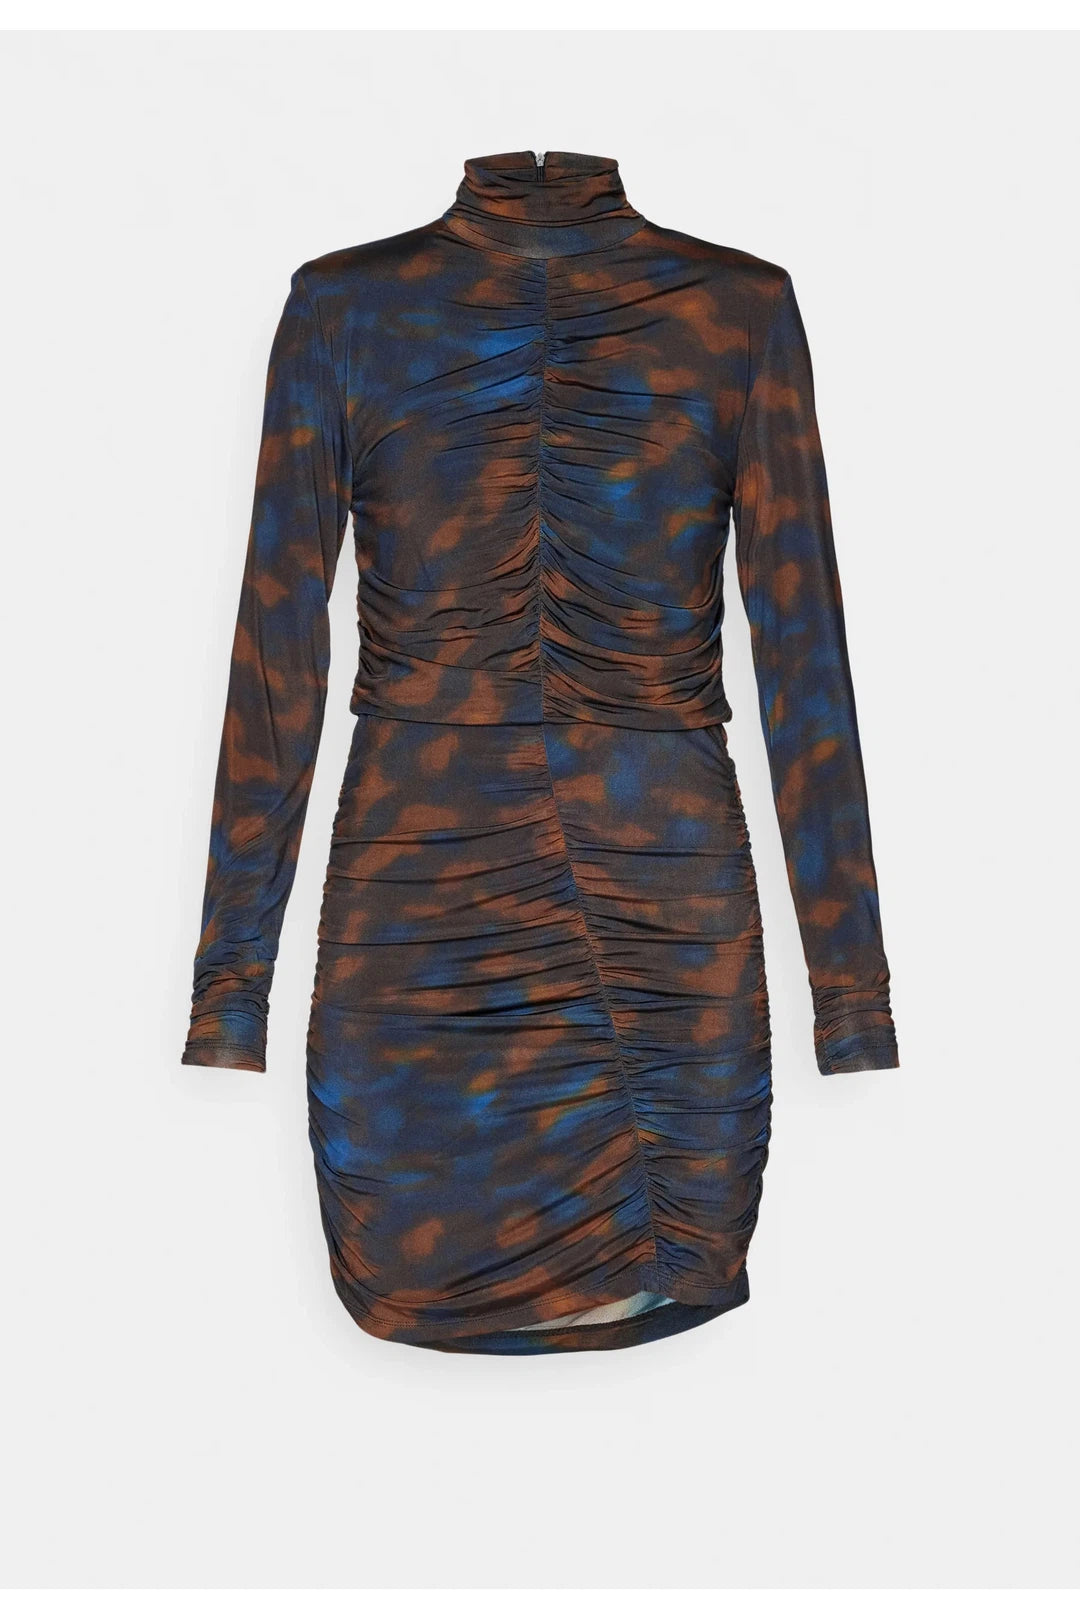 Aline GZ short dress, blue ripple